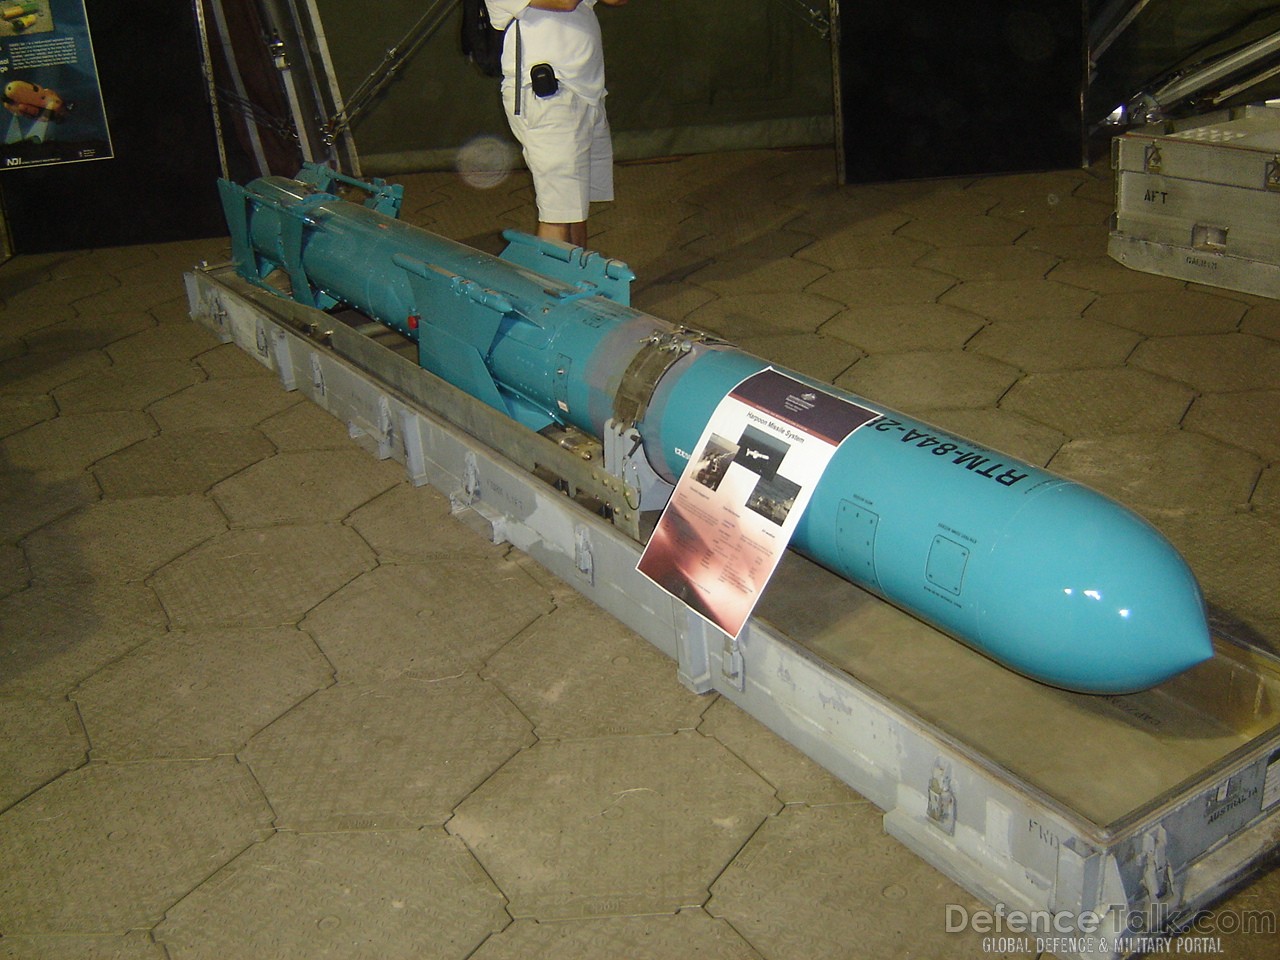 AGM-84 Harpoon captive carry missile - Avalon